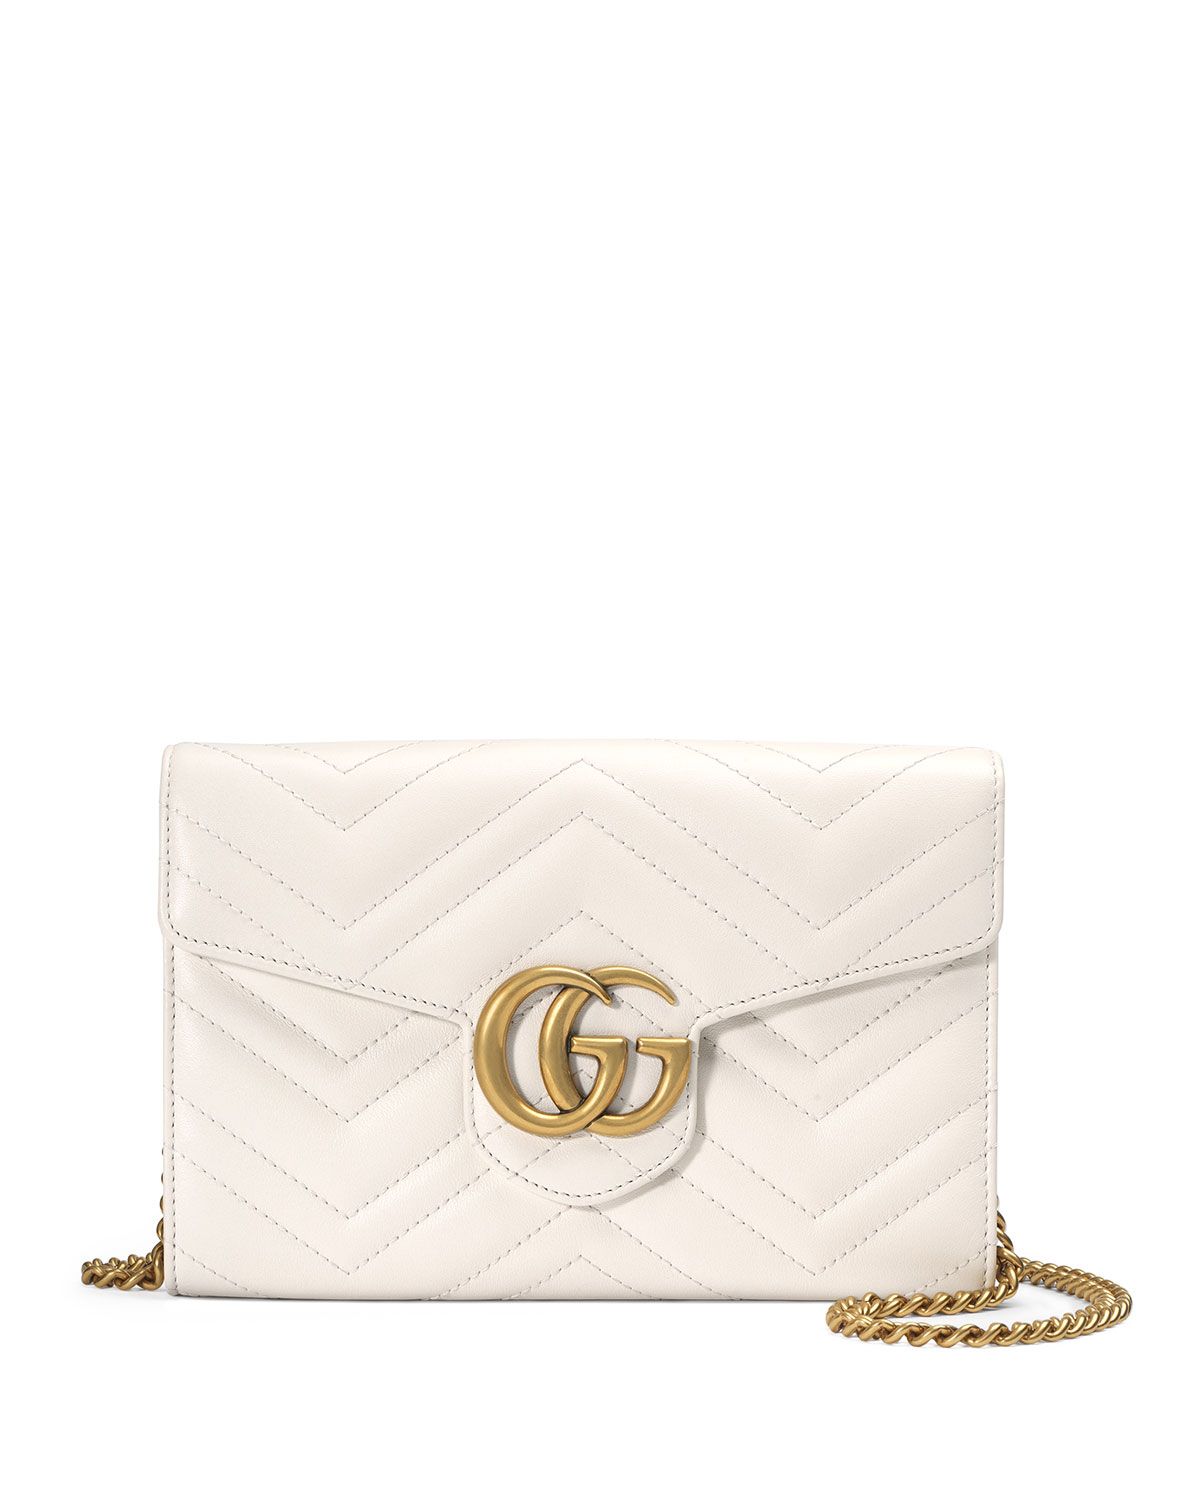 Gucci GG Marmont Mini Matelassé Chain Bag, White | Neiman Marcus